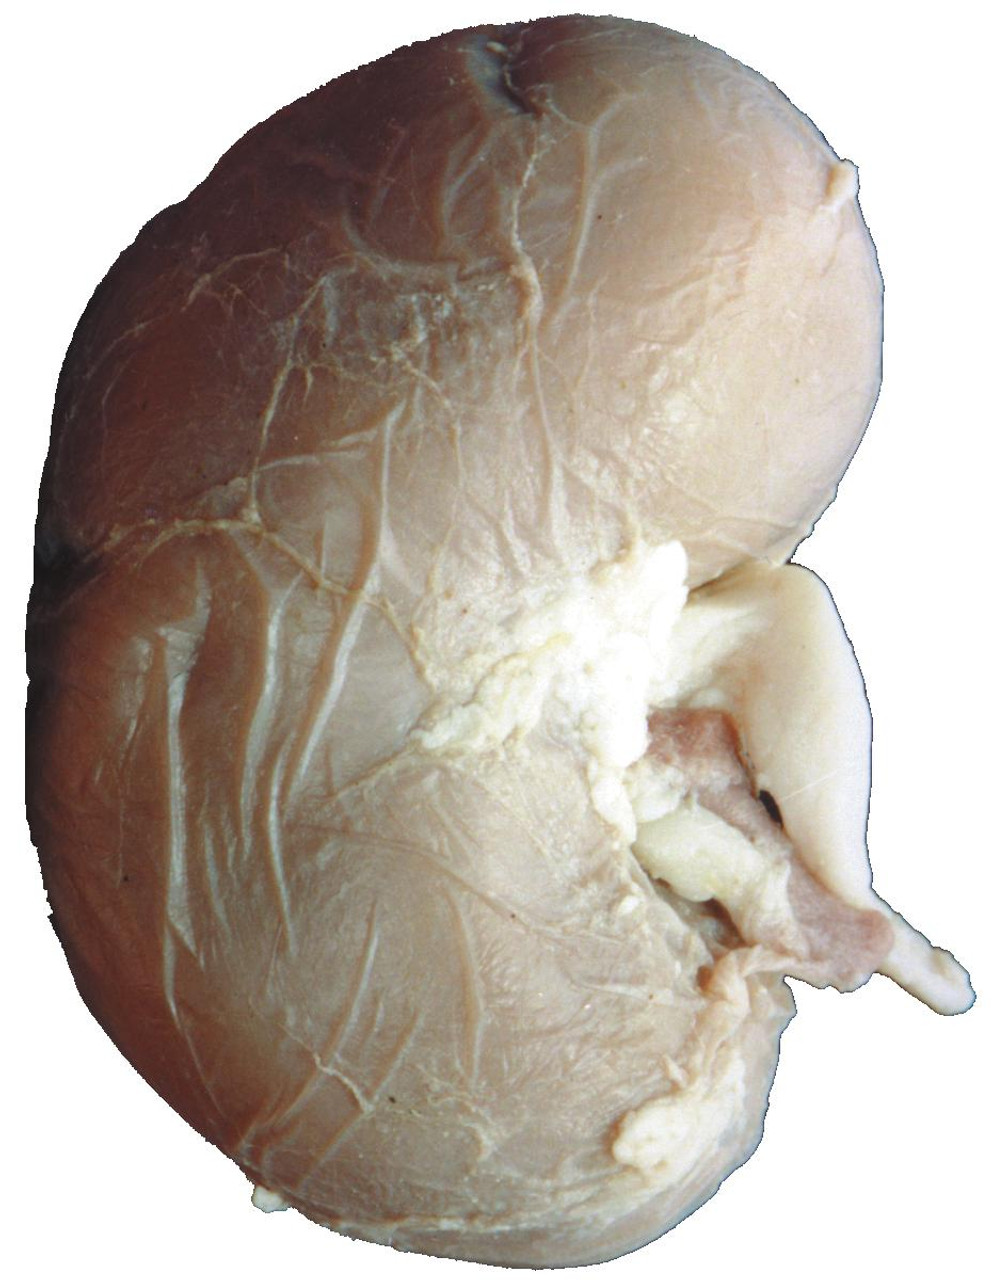 Sheep Kidney Dissection Specimen | Learn Human Anatomy